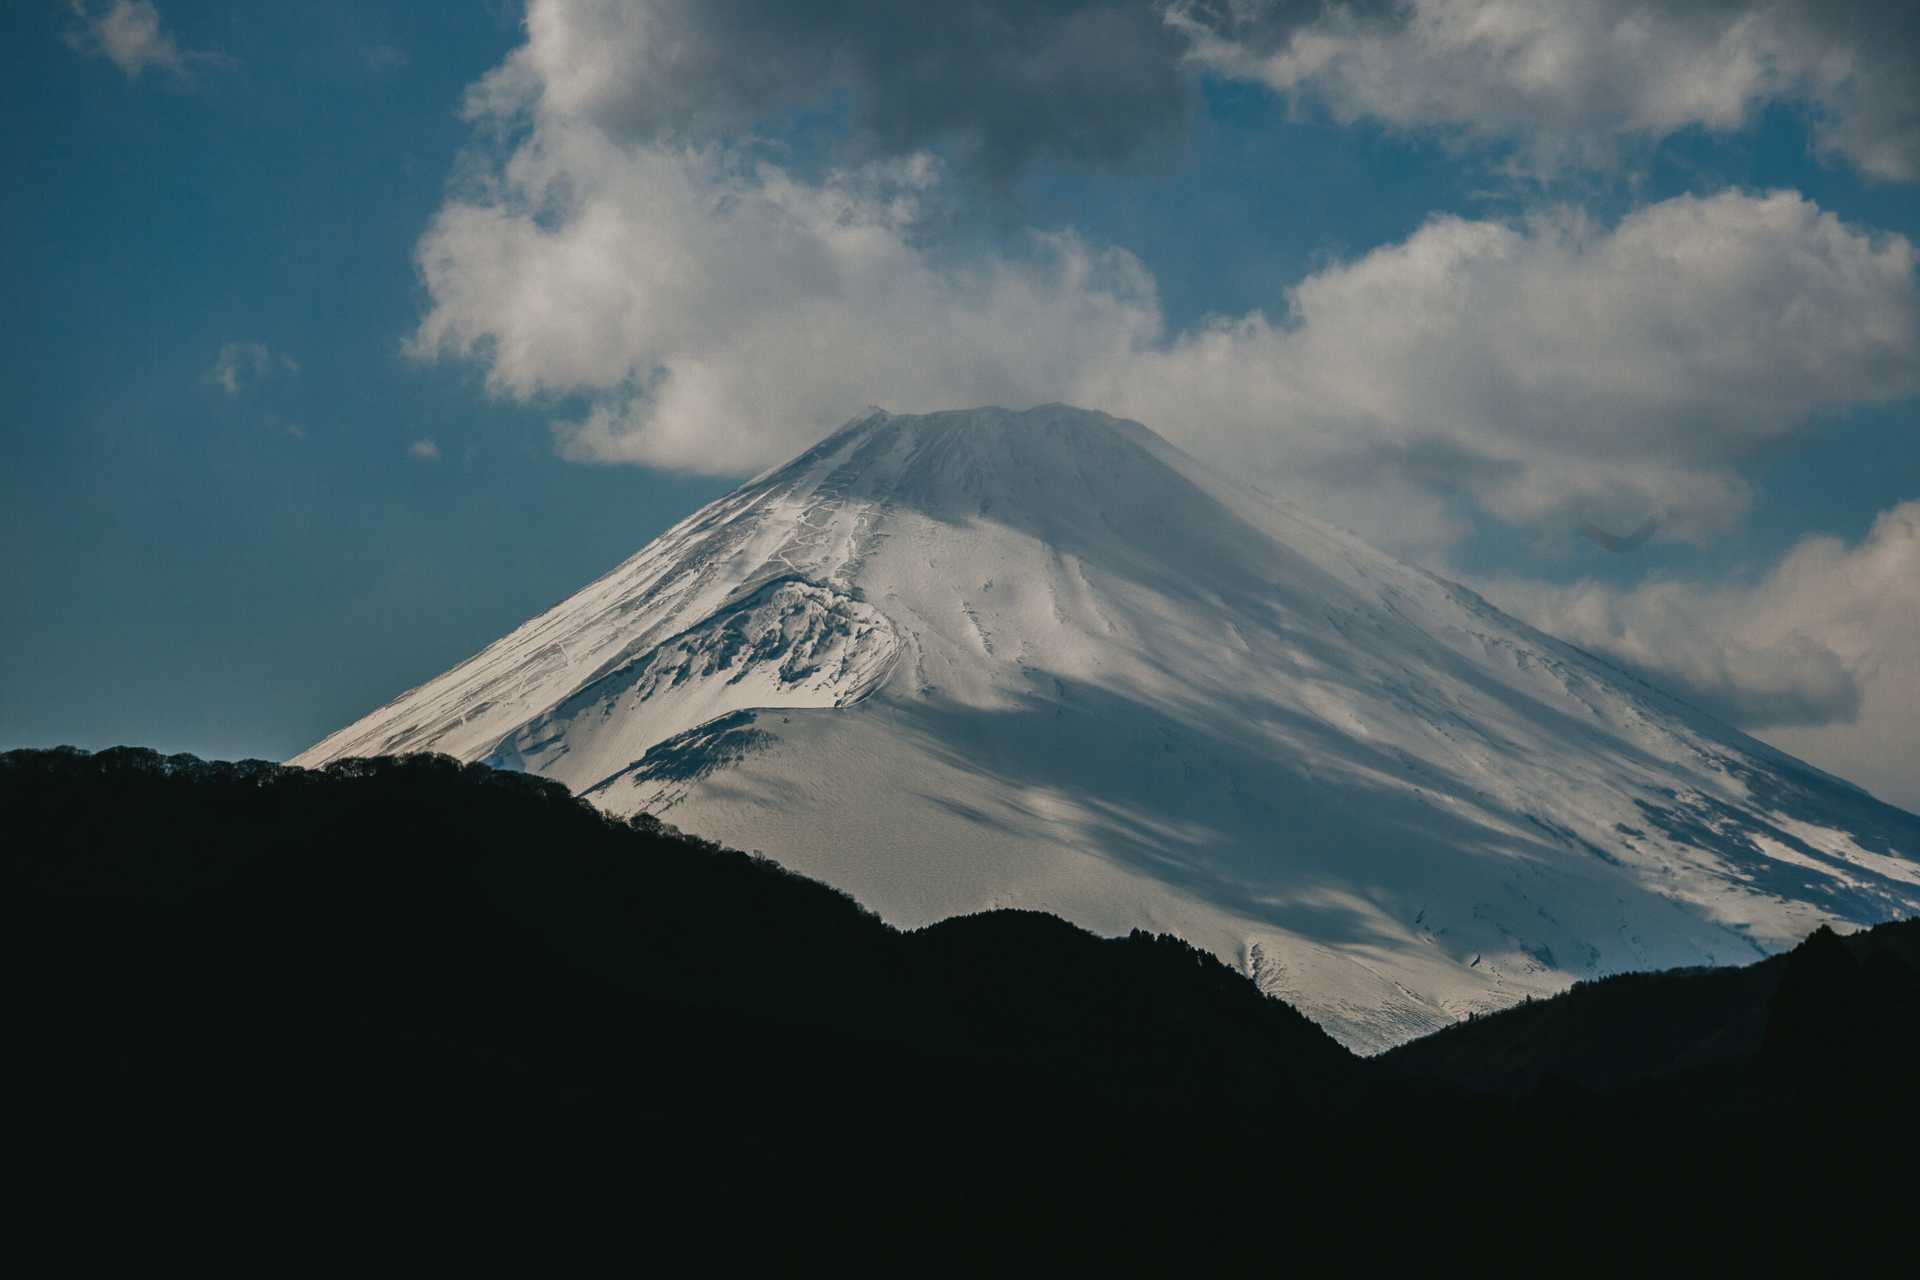 Hakone/Fuji